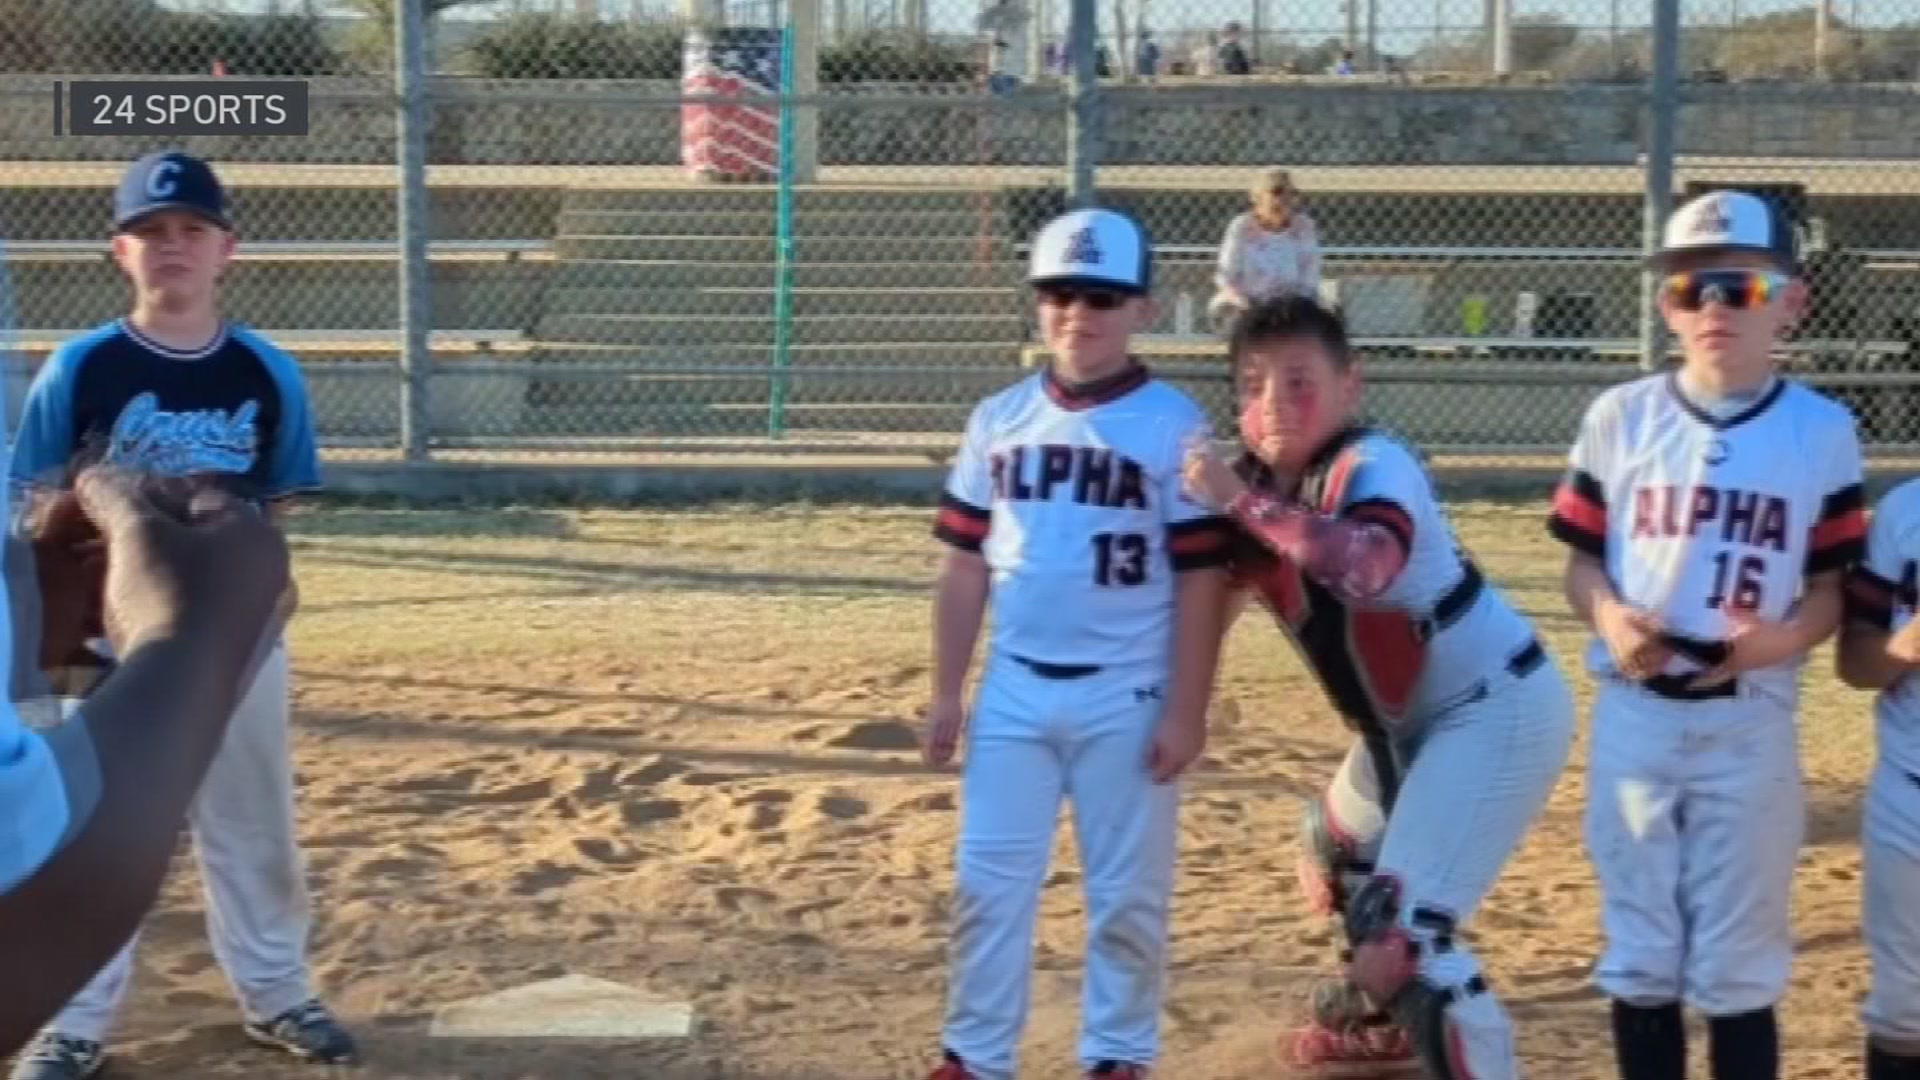 MLB team gives a courageous teen an All-Star baseball treat